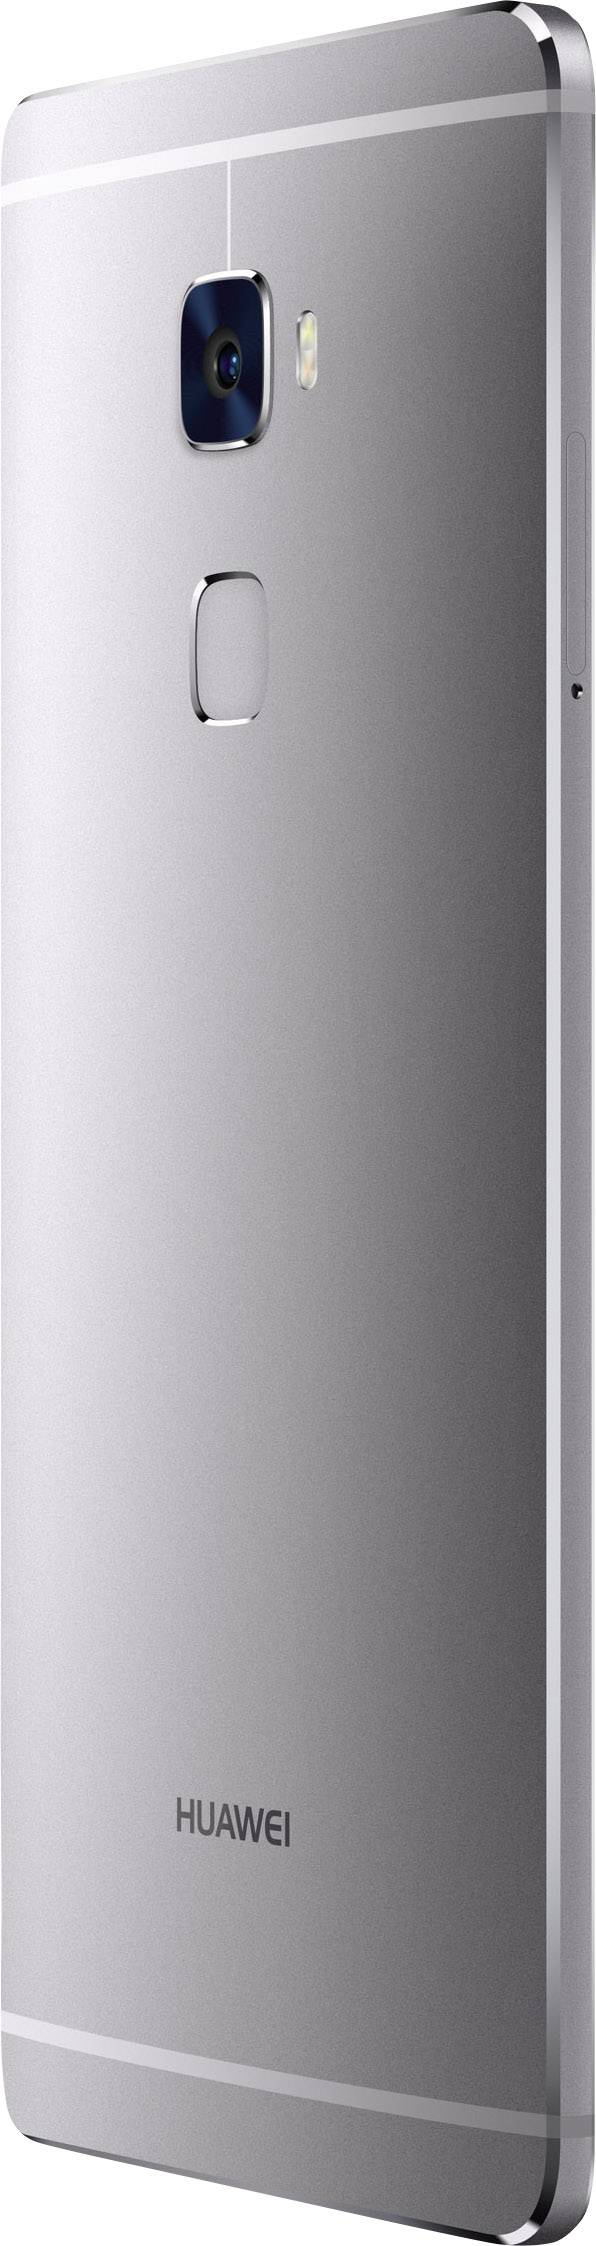 canvas zonlicht bolvormig Huawei Mate S Smartphone 32 GB () Grey | Conrad.com